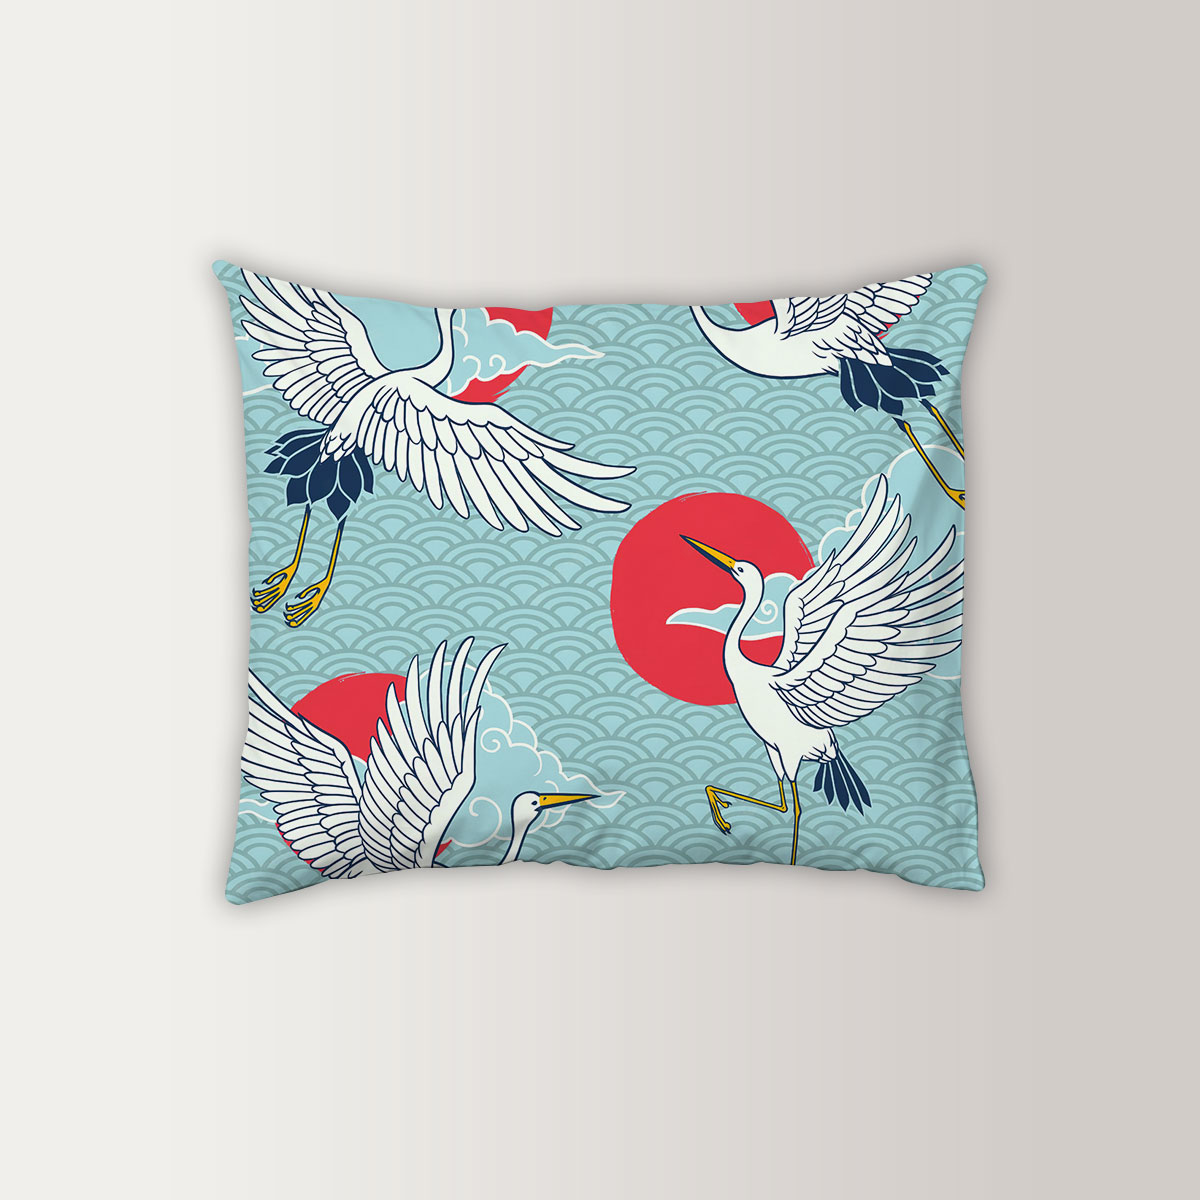 Iconic Flying Heron Art Pillow Case